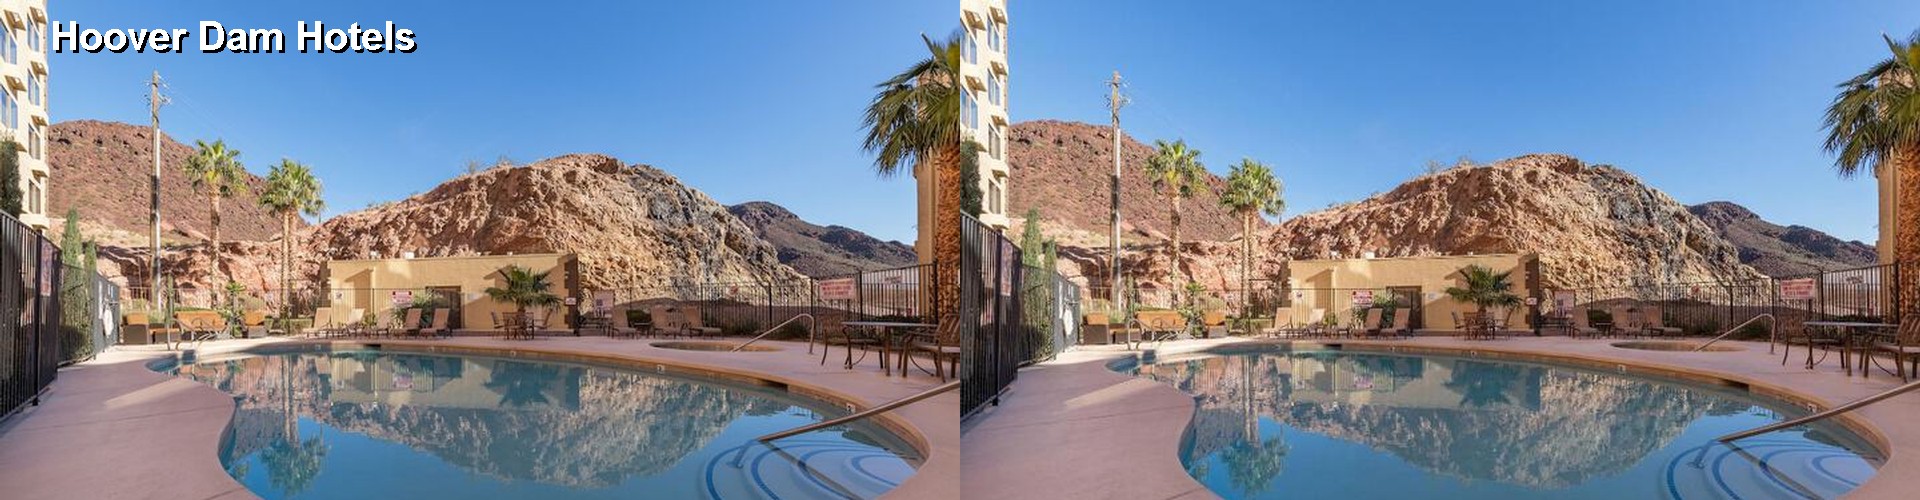 5 Best Hotels near Hoover Dam